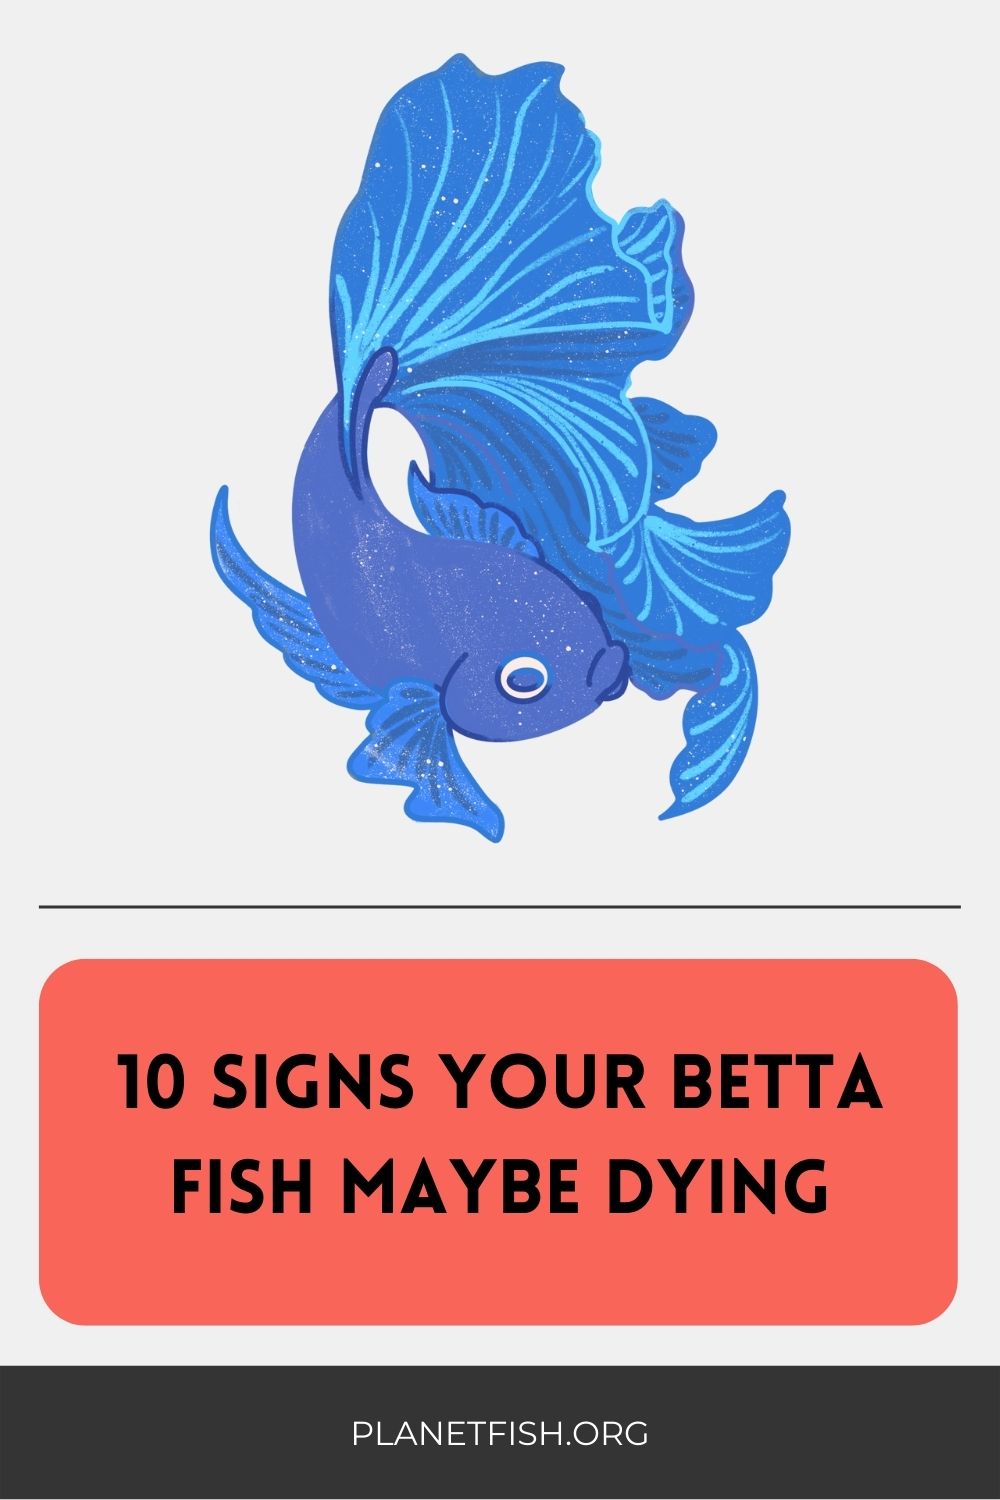 betta fish behavior before death- pin